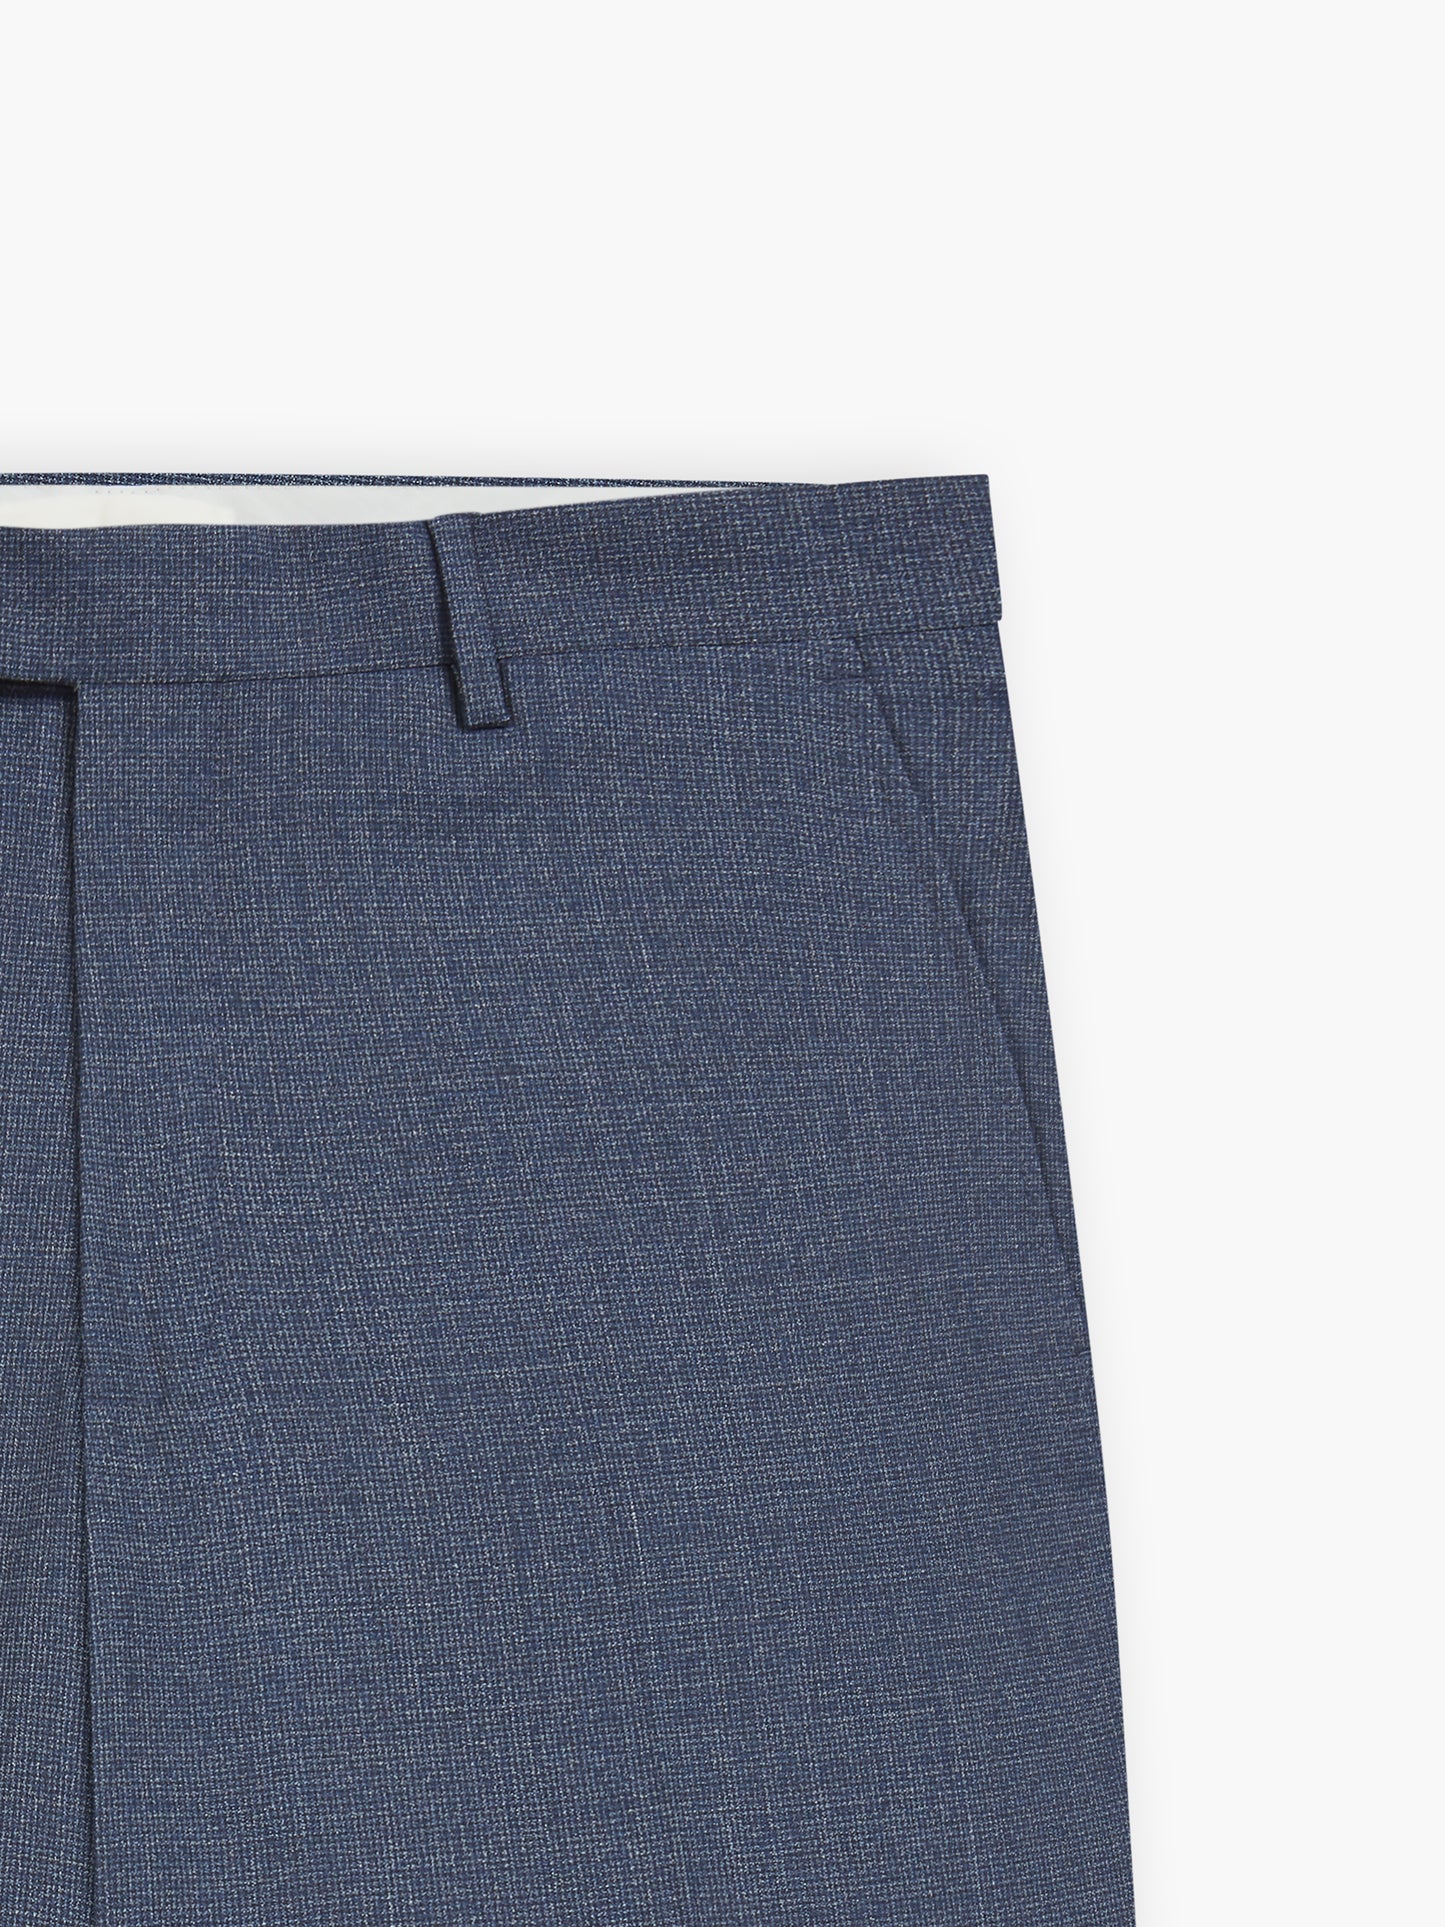 Caselli Zegna Slim Fit Navy Blue Textured Trouser